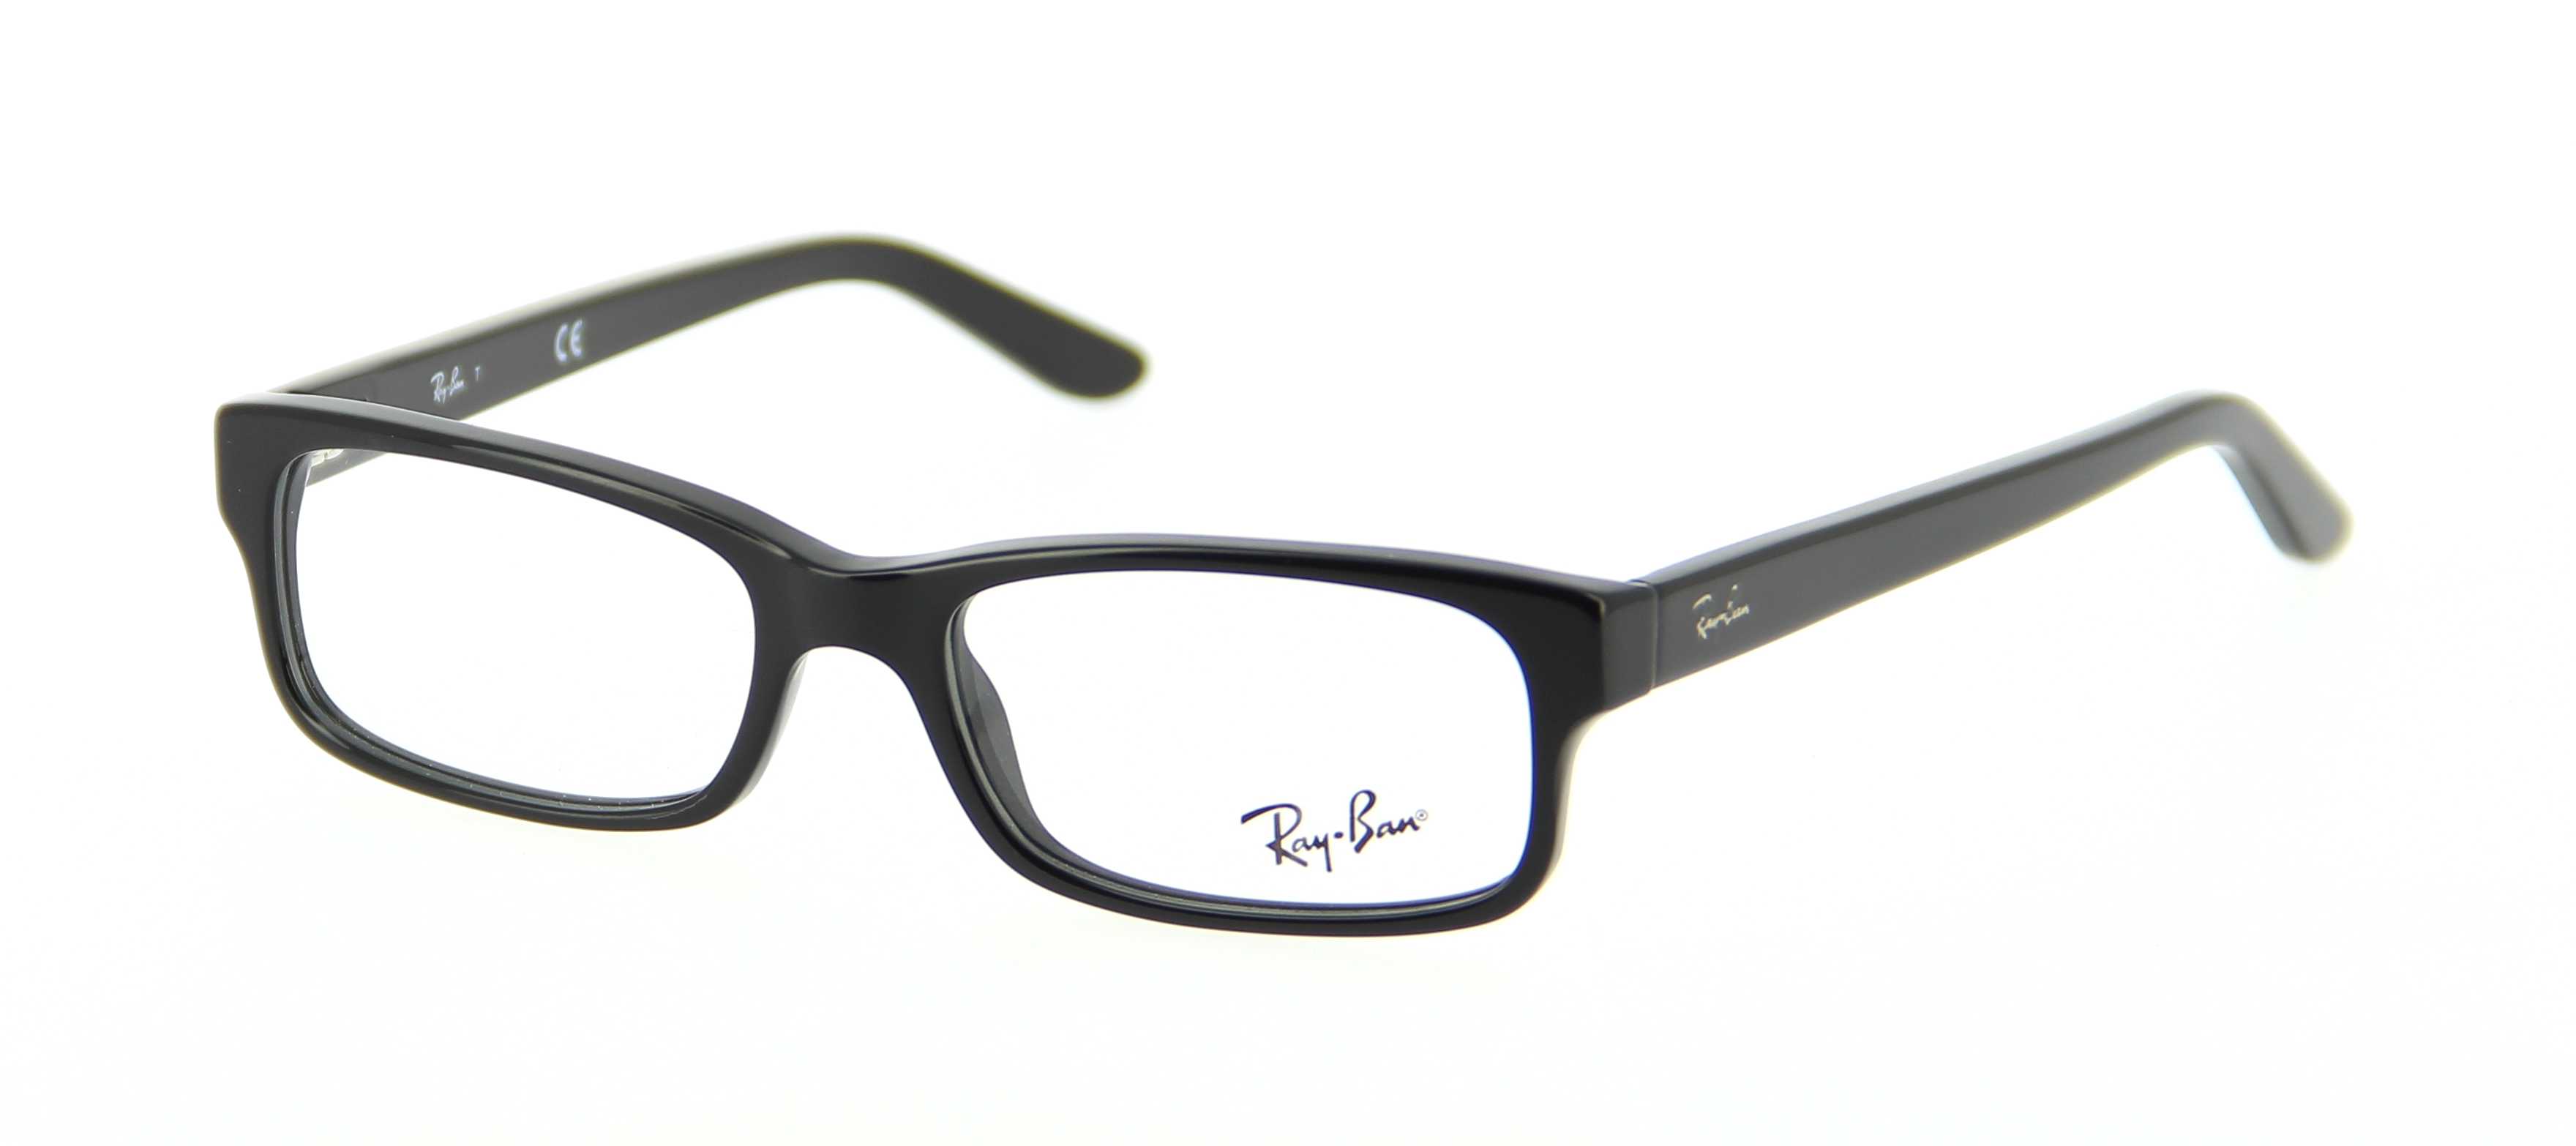 ray ban rx5187 eyeglasses